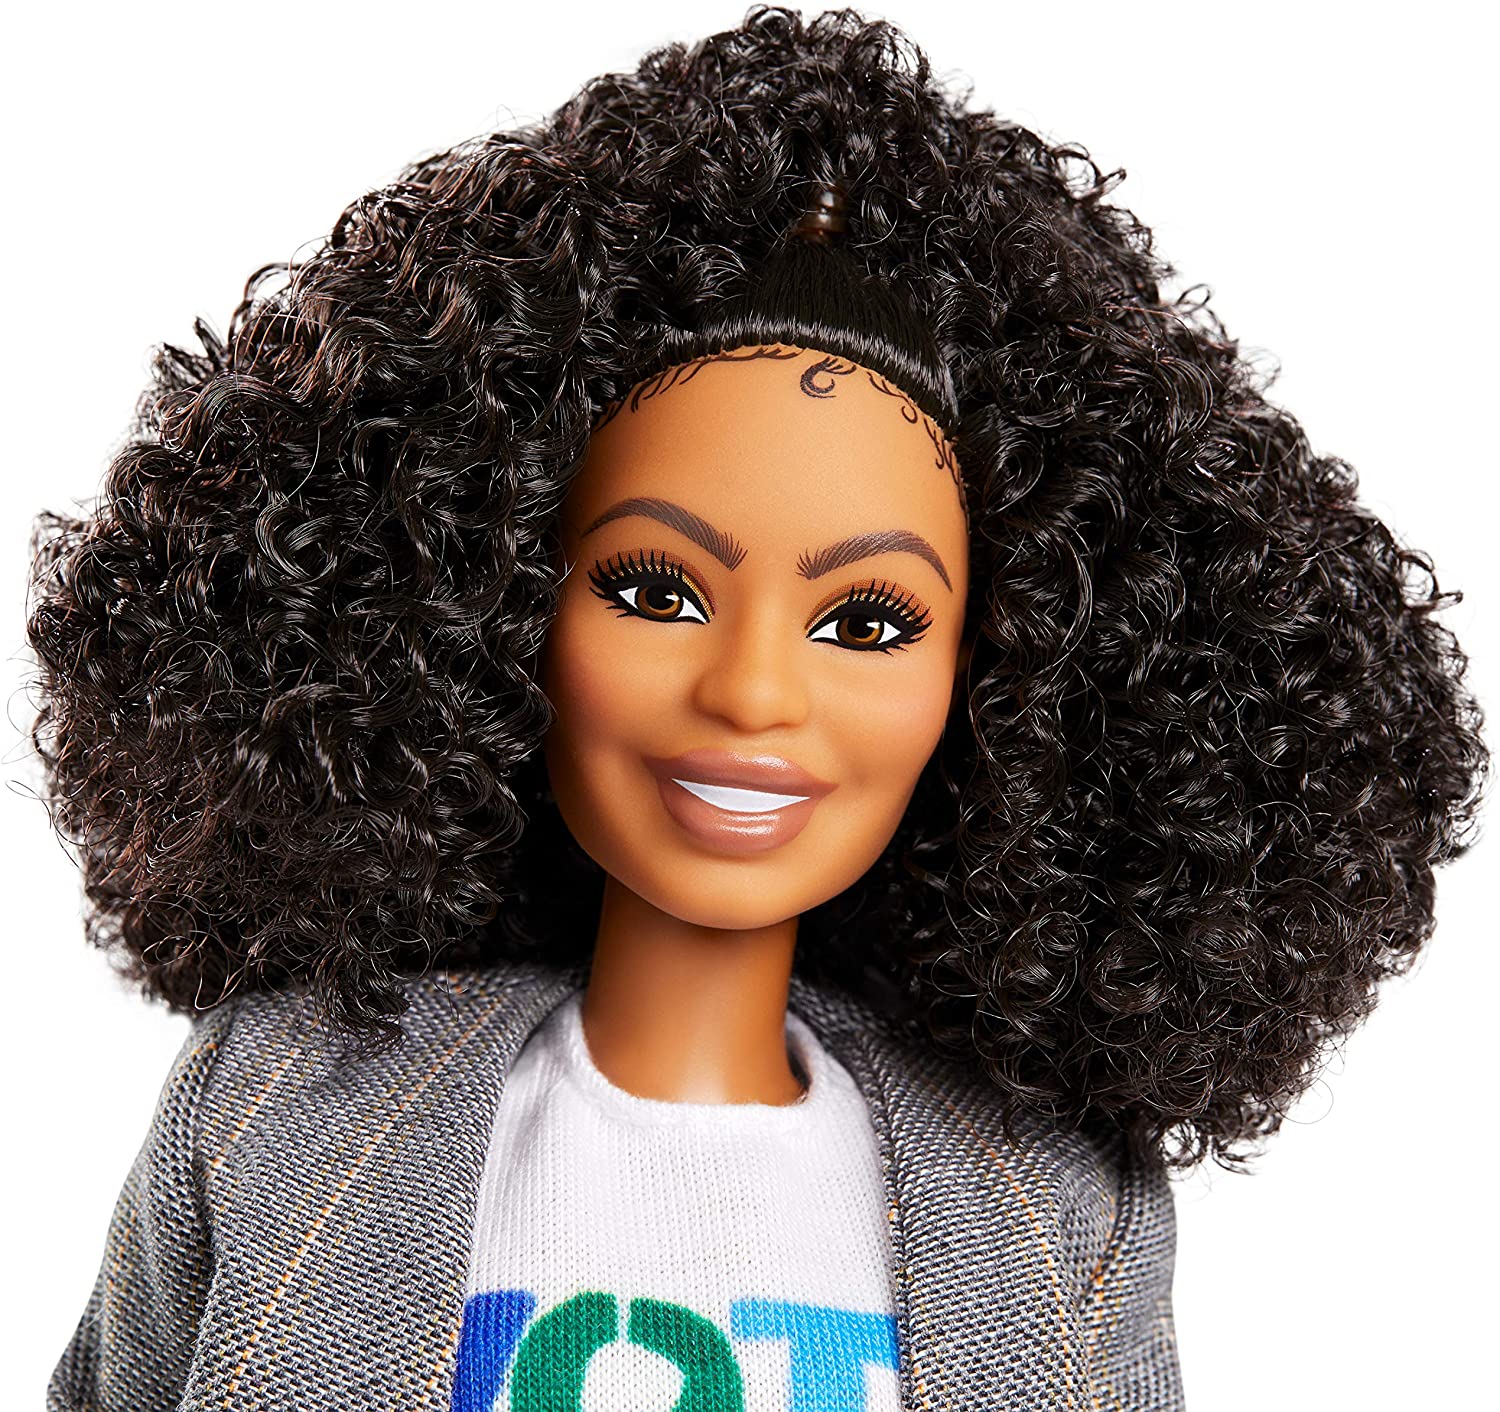 Remember These Black Dolls Before Issa Rae's President Barbie